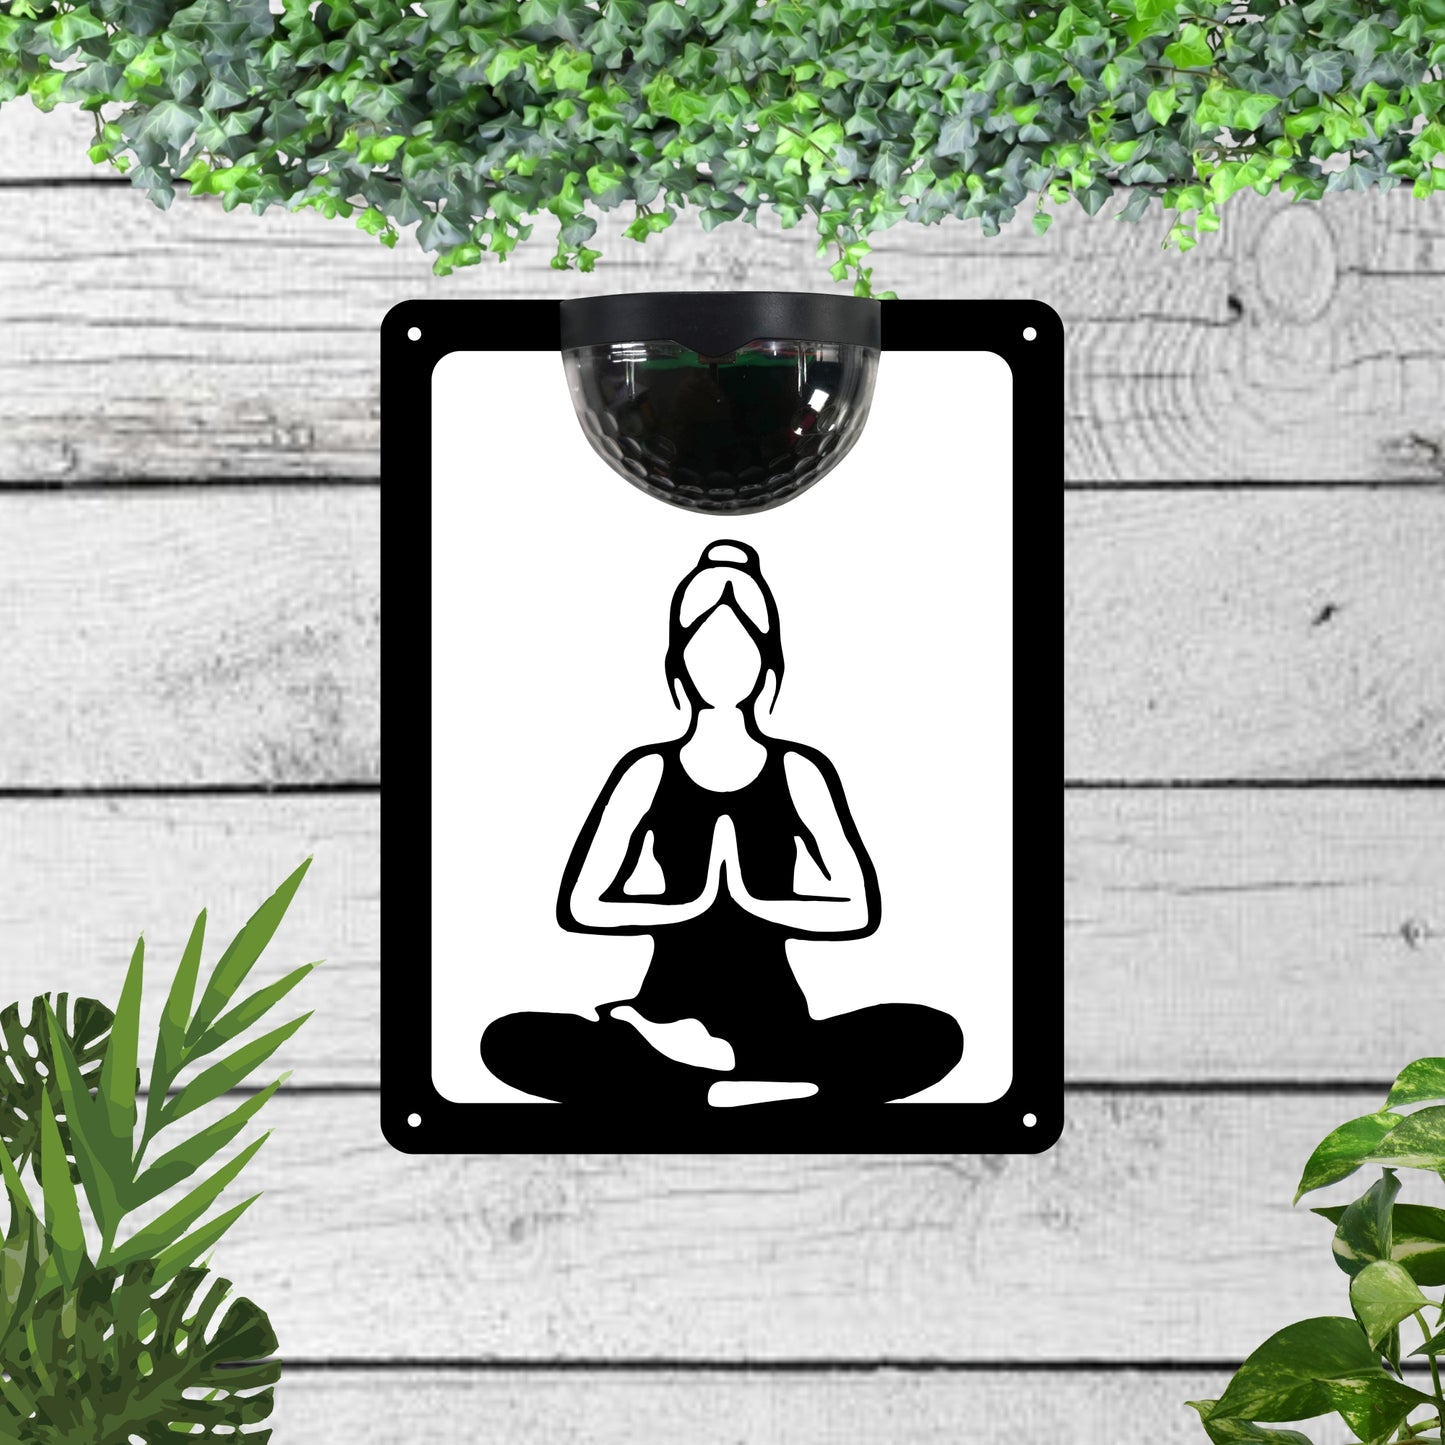 Garden Solar Light Wall Plaque With a Woman Doing Yoga | John Alans